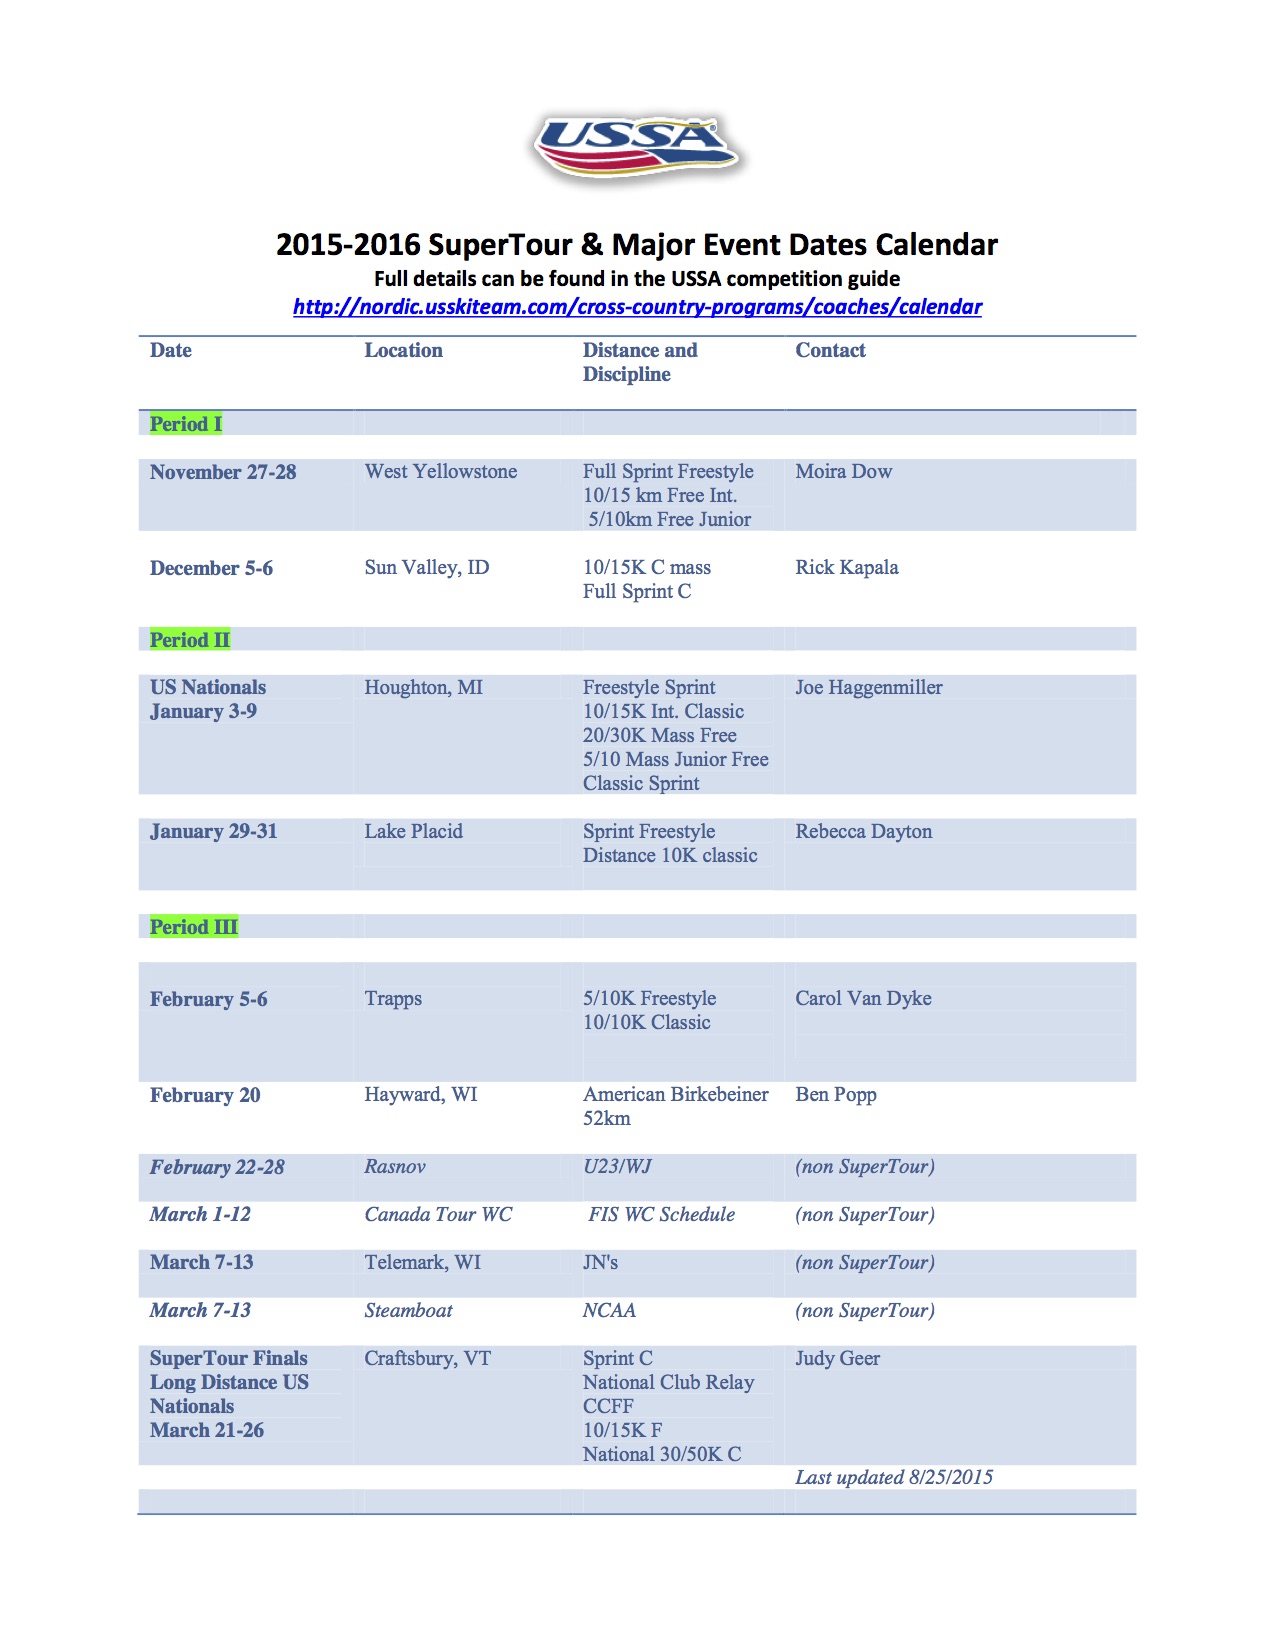 2015-2016 SuperTour Schedule